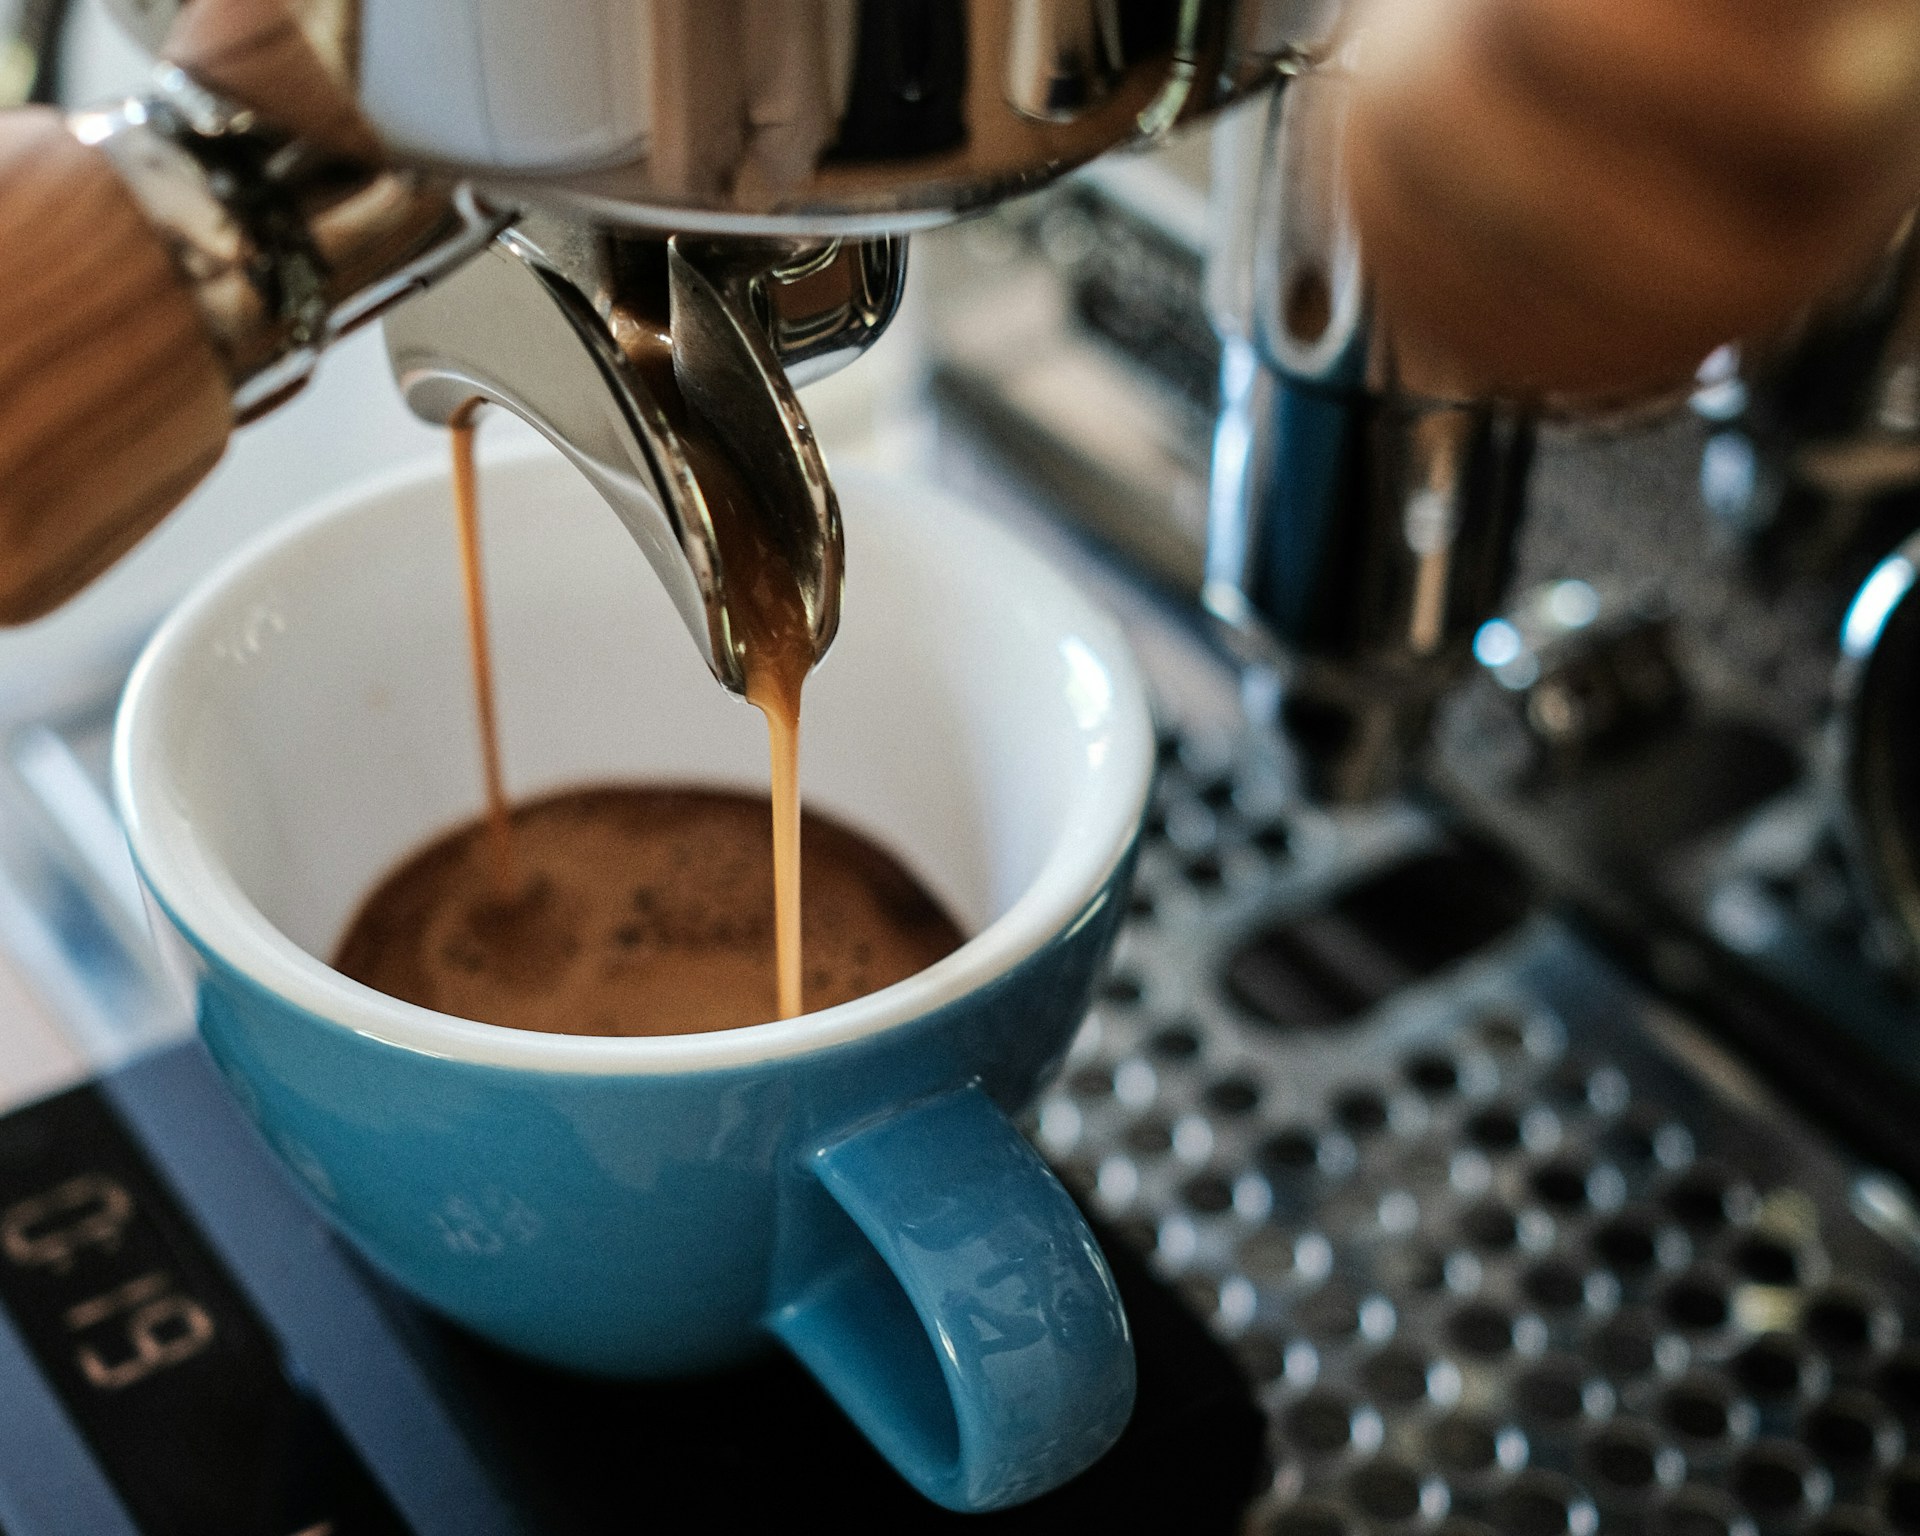 An espresso pouring into a coffee machine